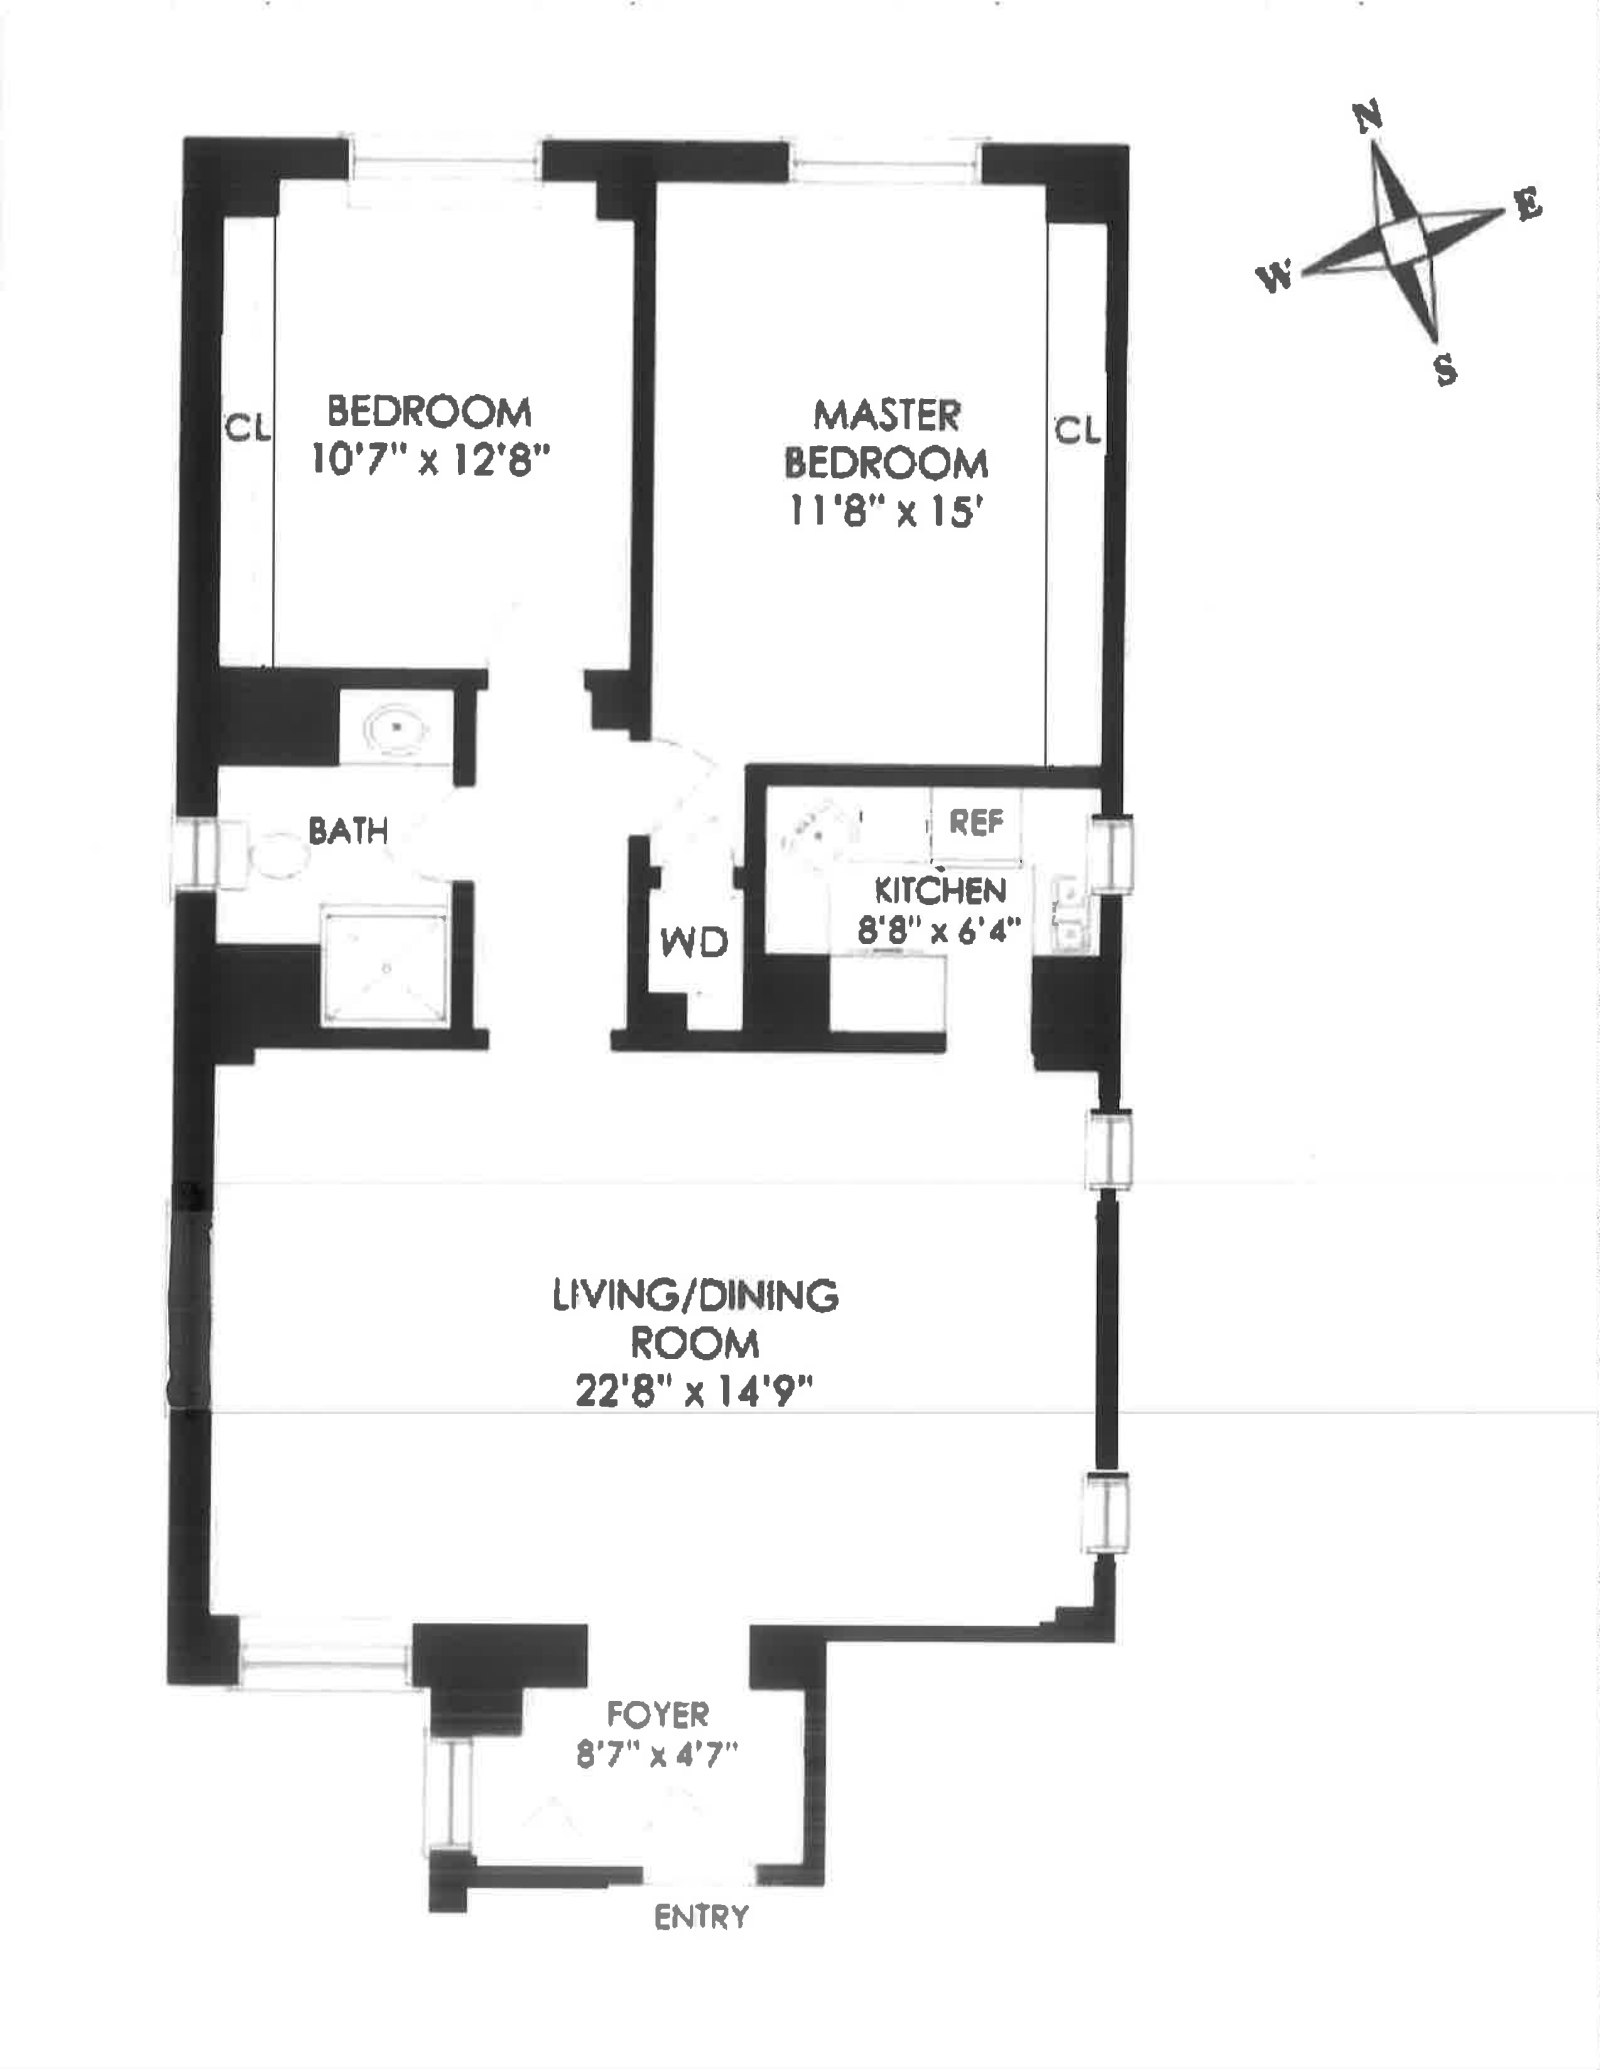 Floorplan for 108 East 66th Street, 9A